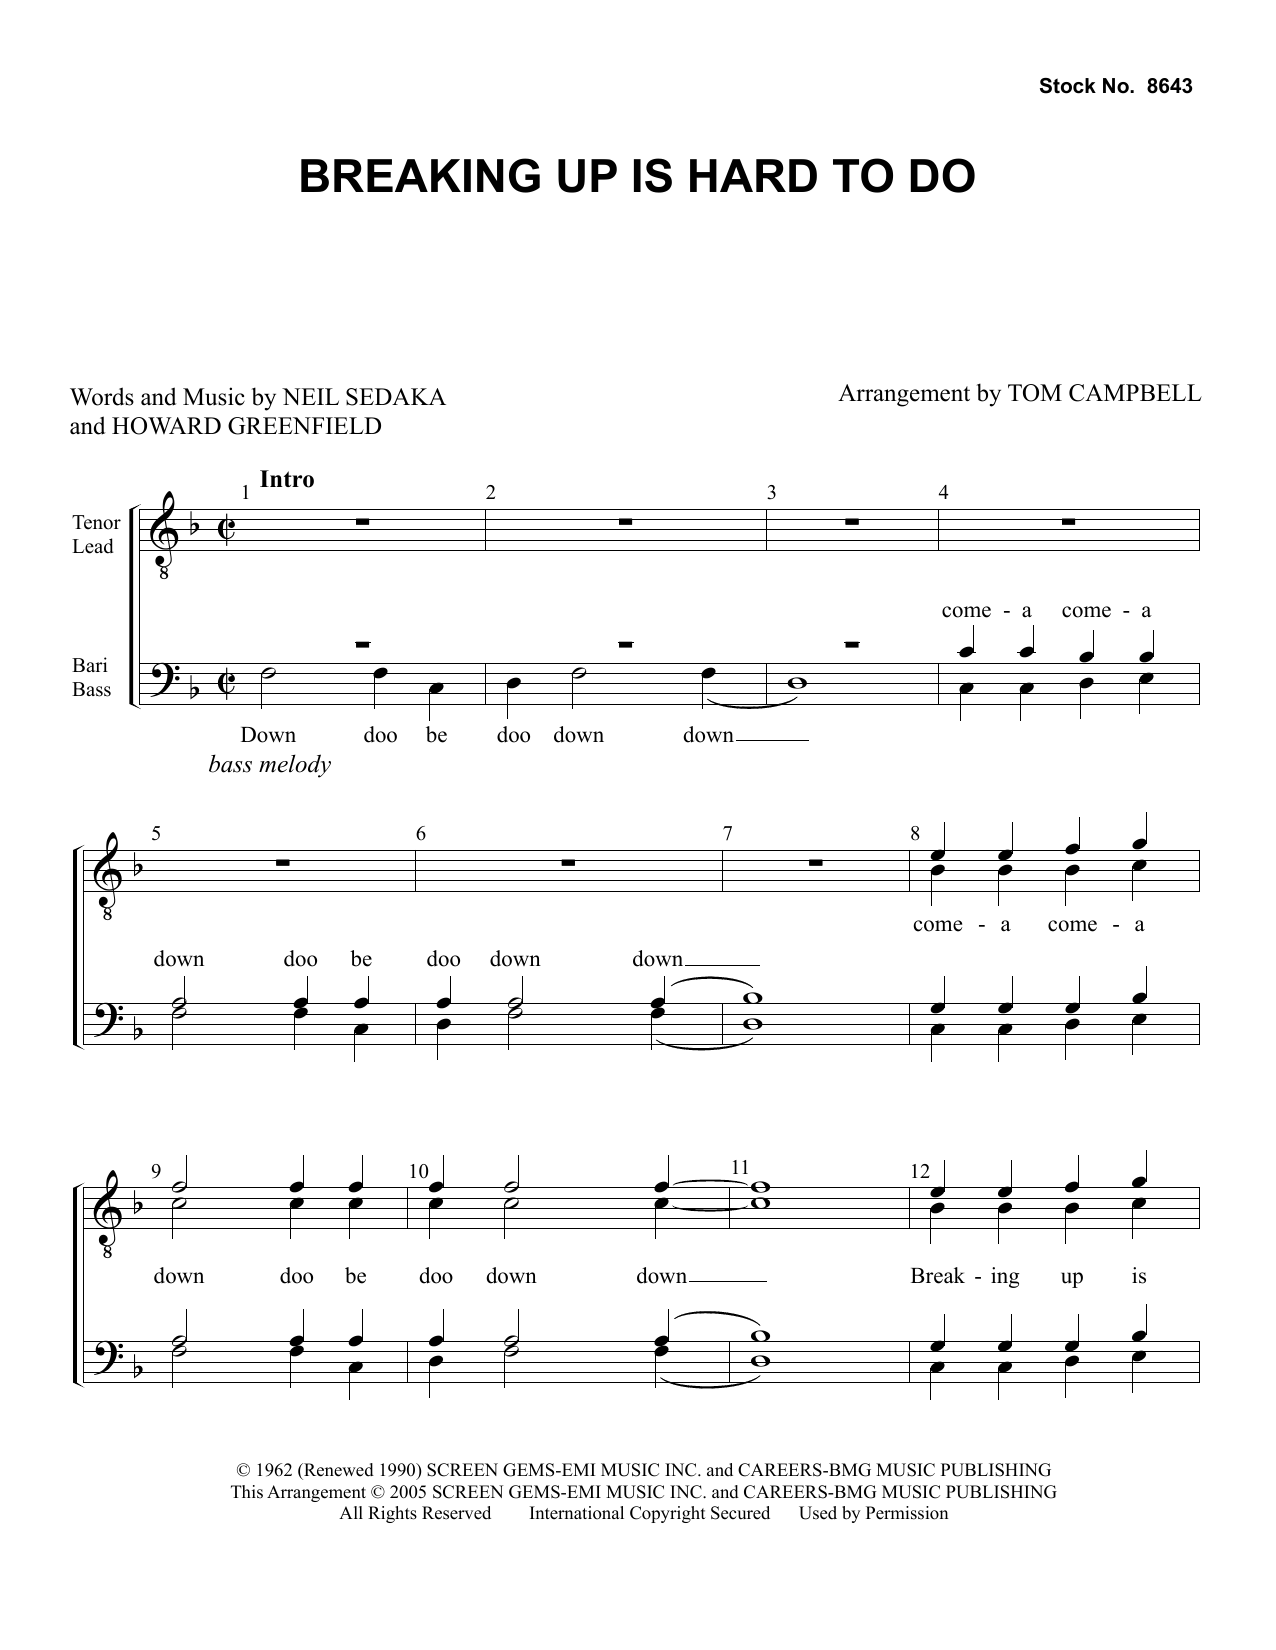 Neil Sedaka Breaking Up Is Hard To Do (arr. Tom Campbell) Sheet Music Notes & Chords for TTBB Choir - Download or Print PDF